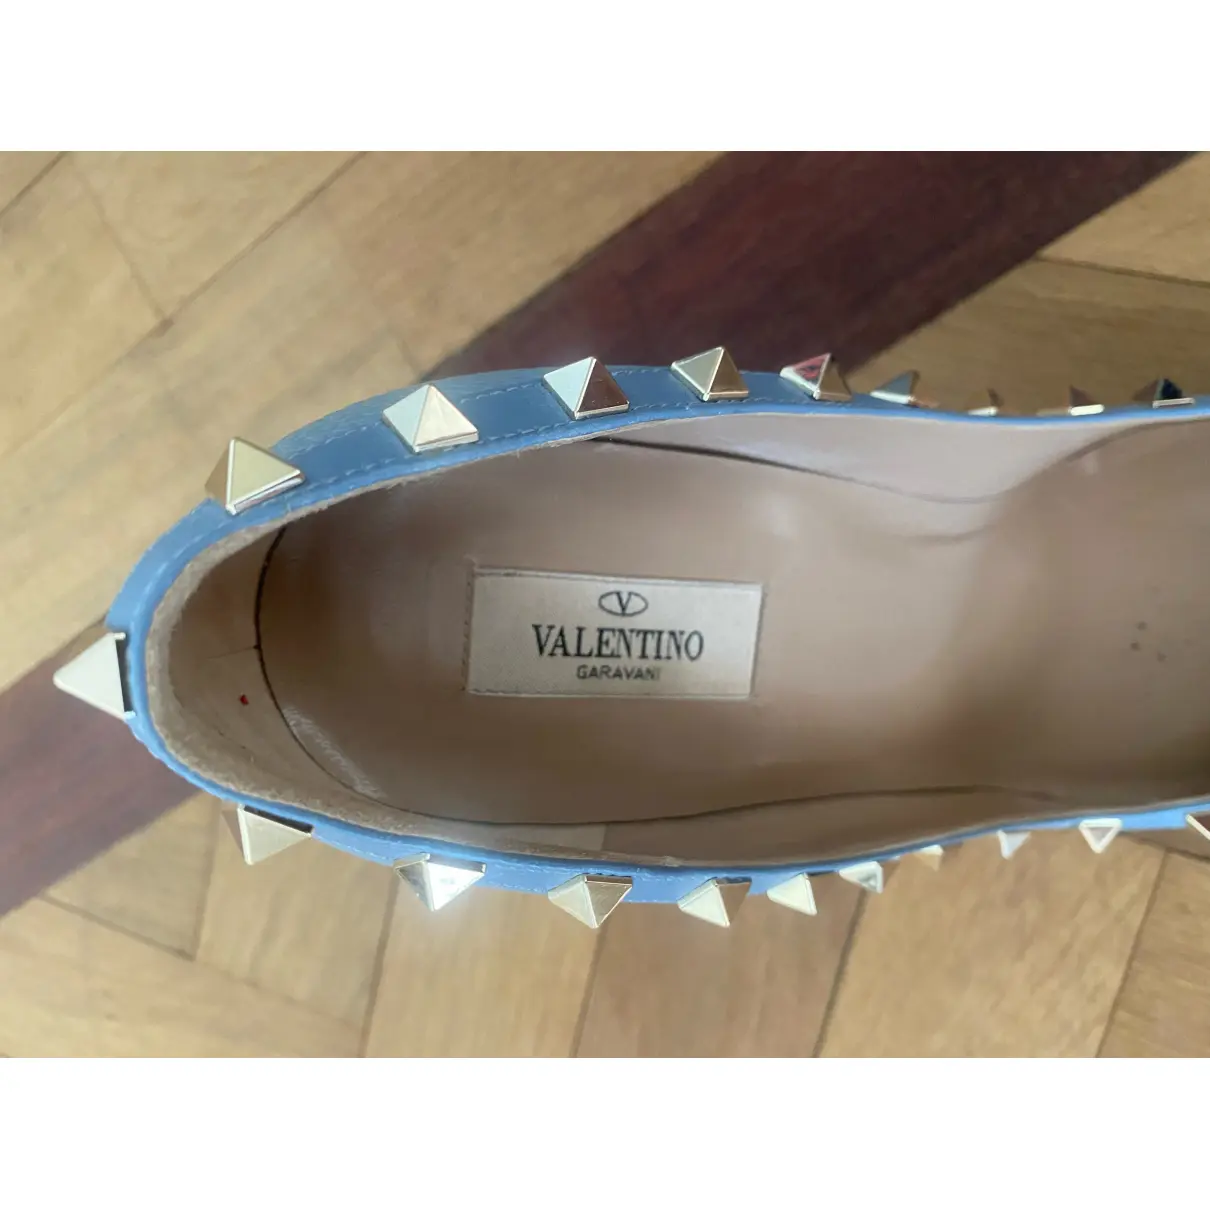 Buy Valentino Garavani Leather heels online